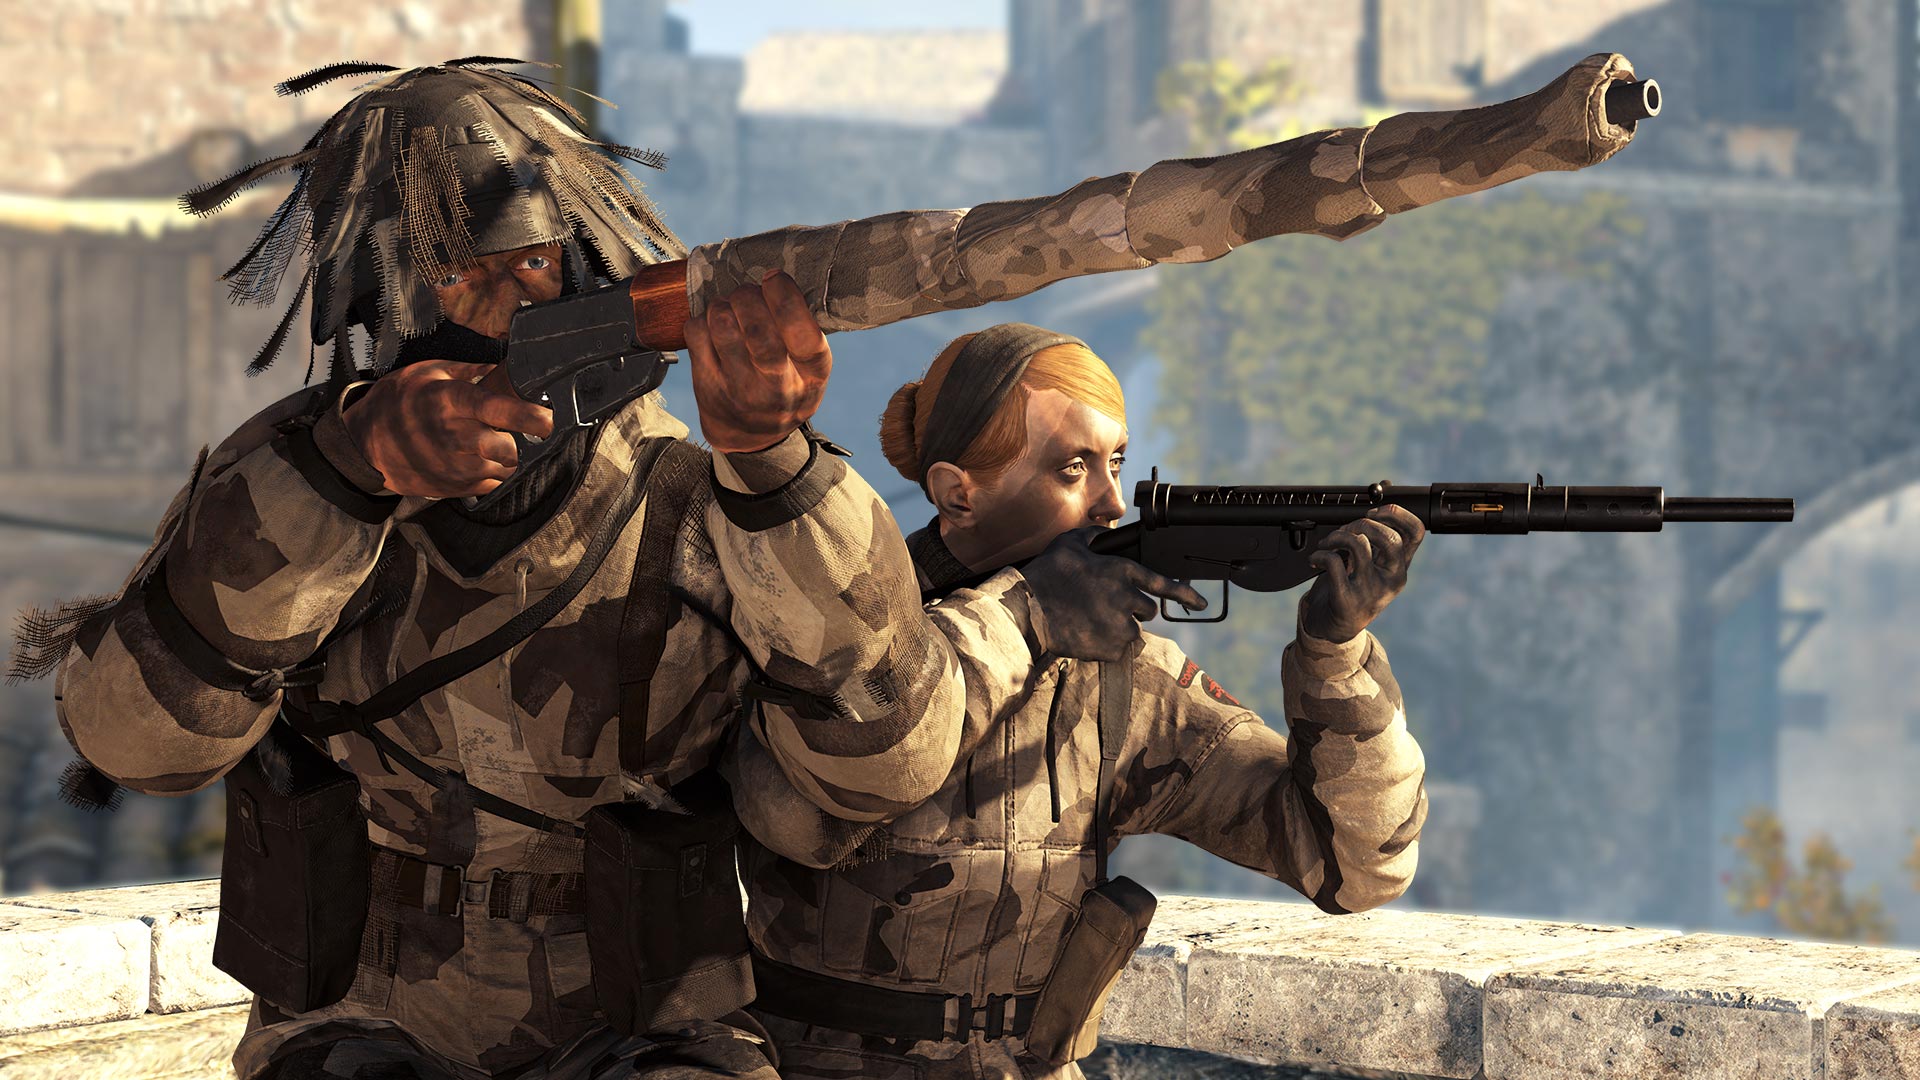 [$ 5.64] Sniper Elite 4 - Urban Assault Expansion Pack DLC Steam CD Key